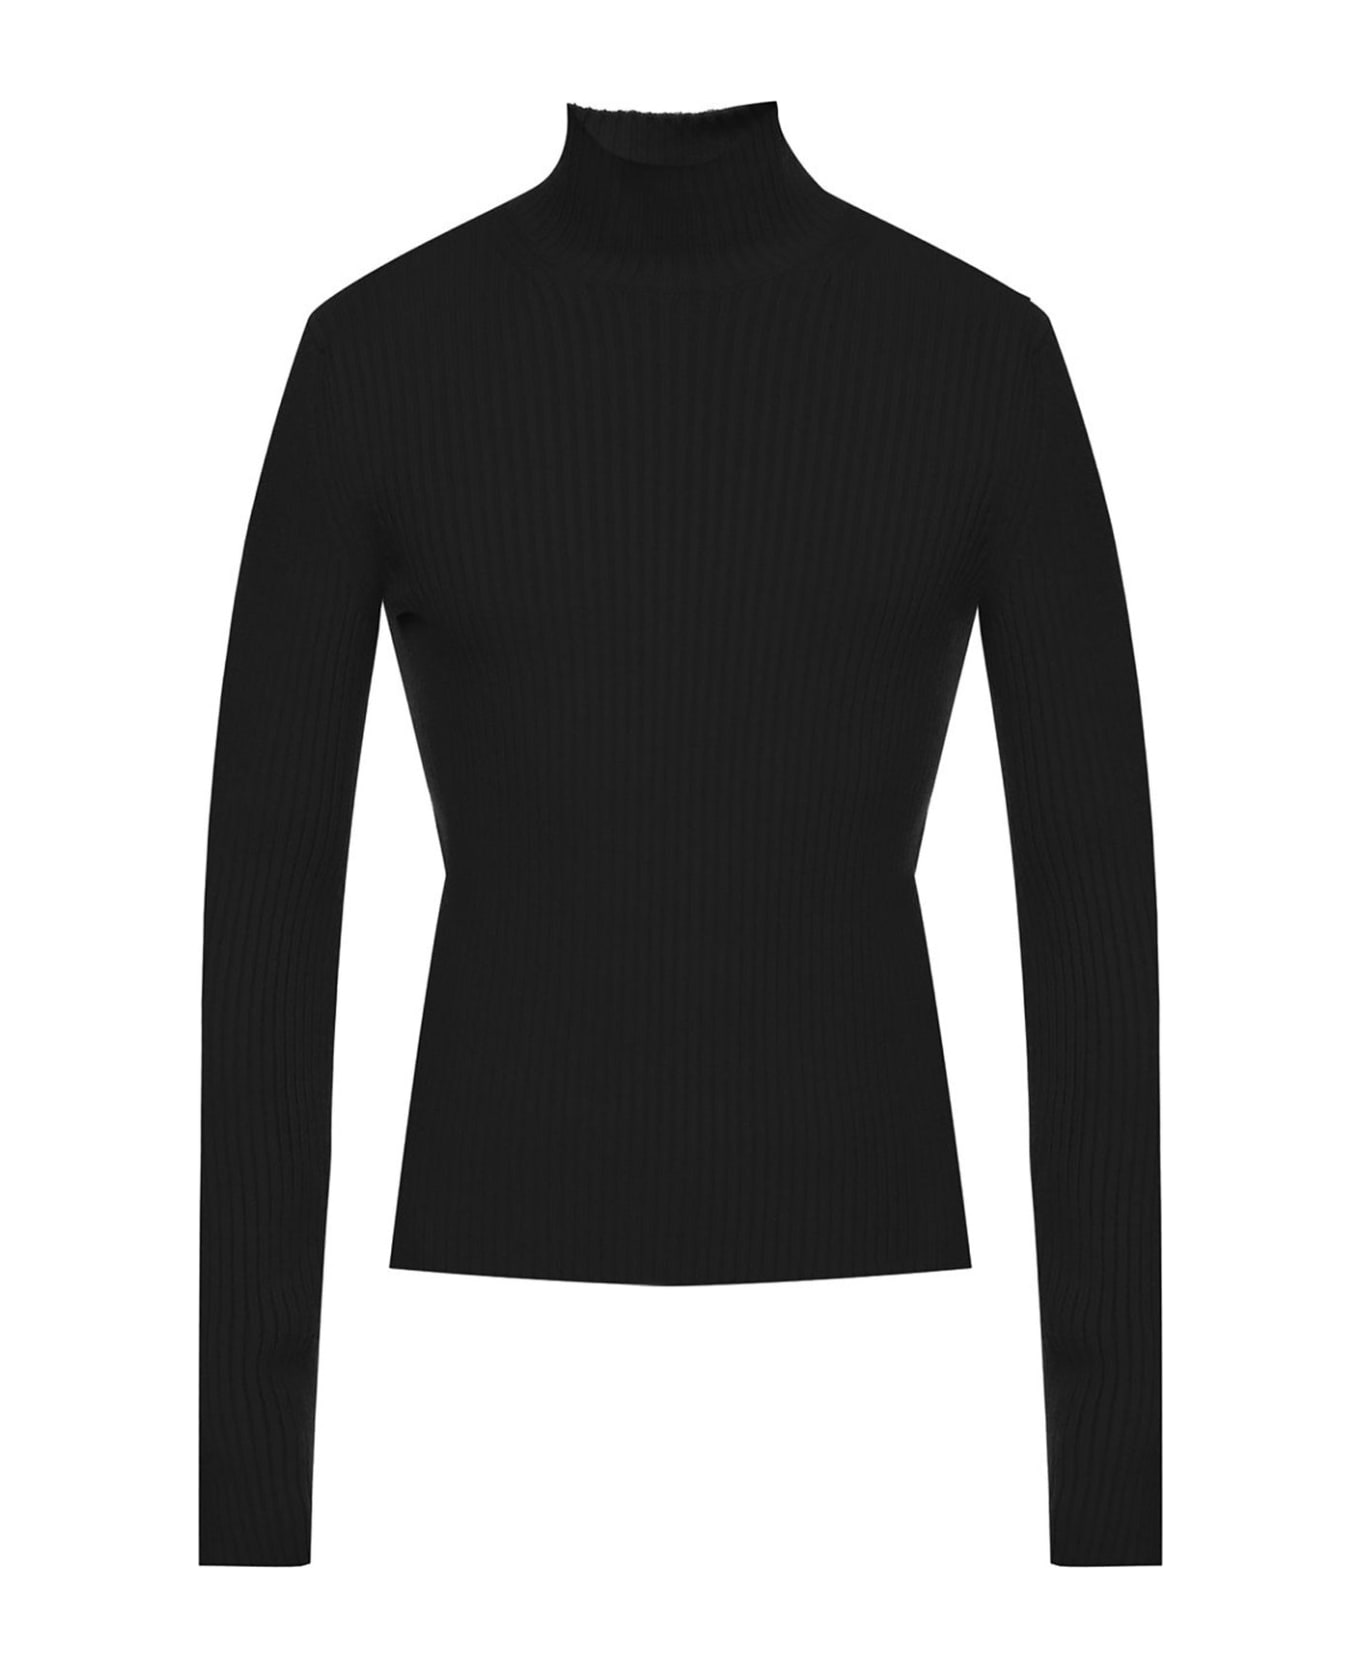 Balenciaga Cashmere Blend Rib Knit Turtleneck - Black